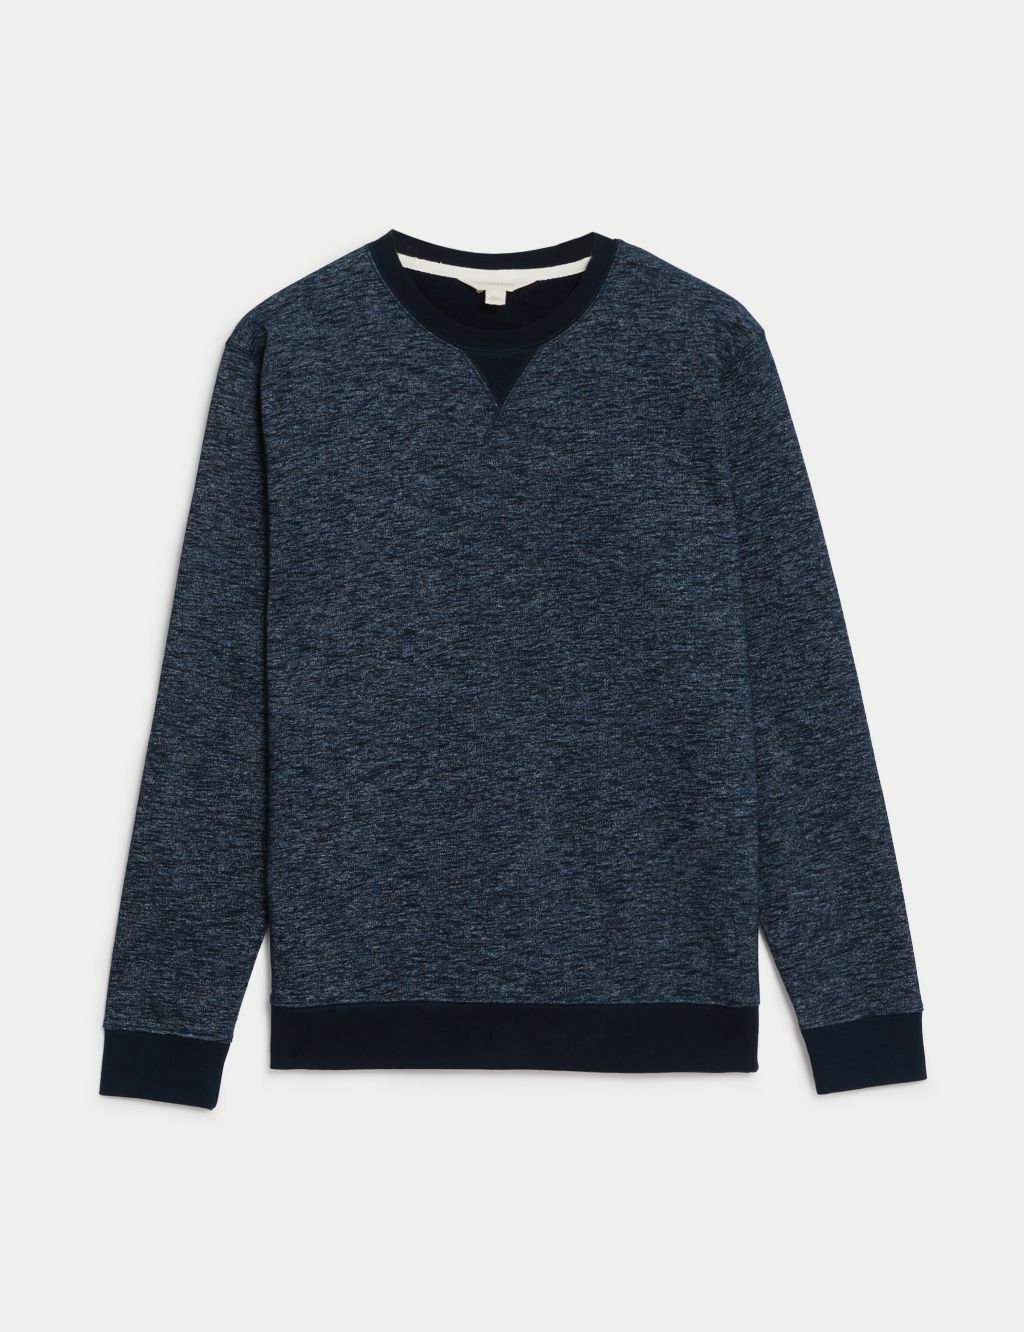 Cotton Rich Space Dye Loungewear Sweatshirt image 2